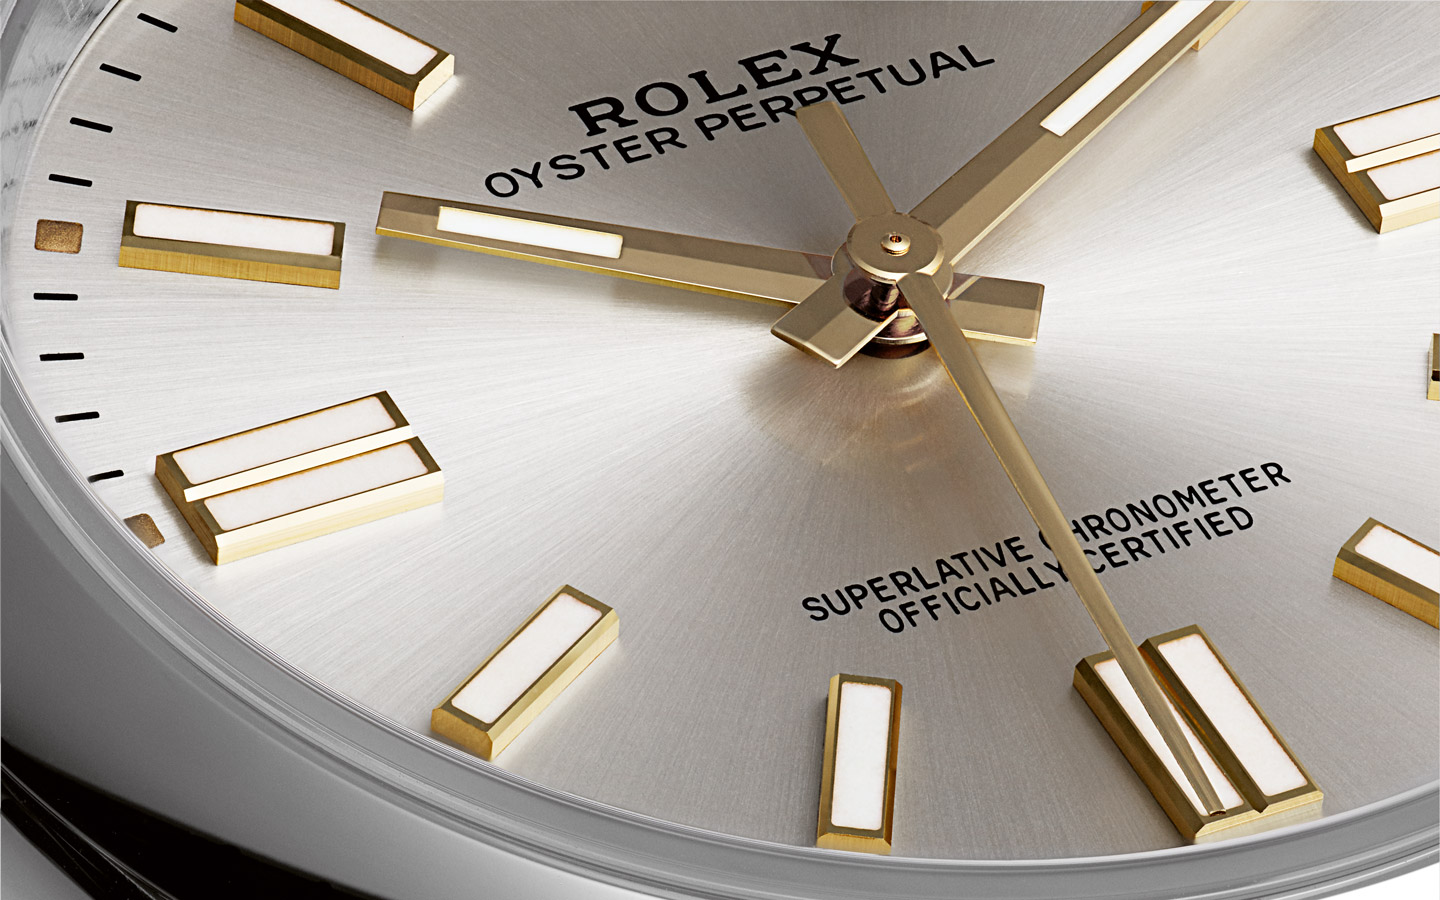 Rolex Oyster Perpetual, superlative chronometer certification